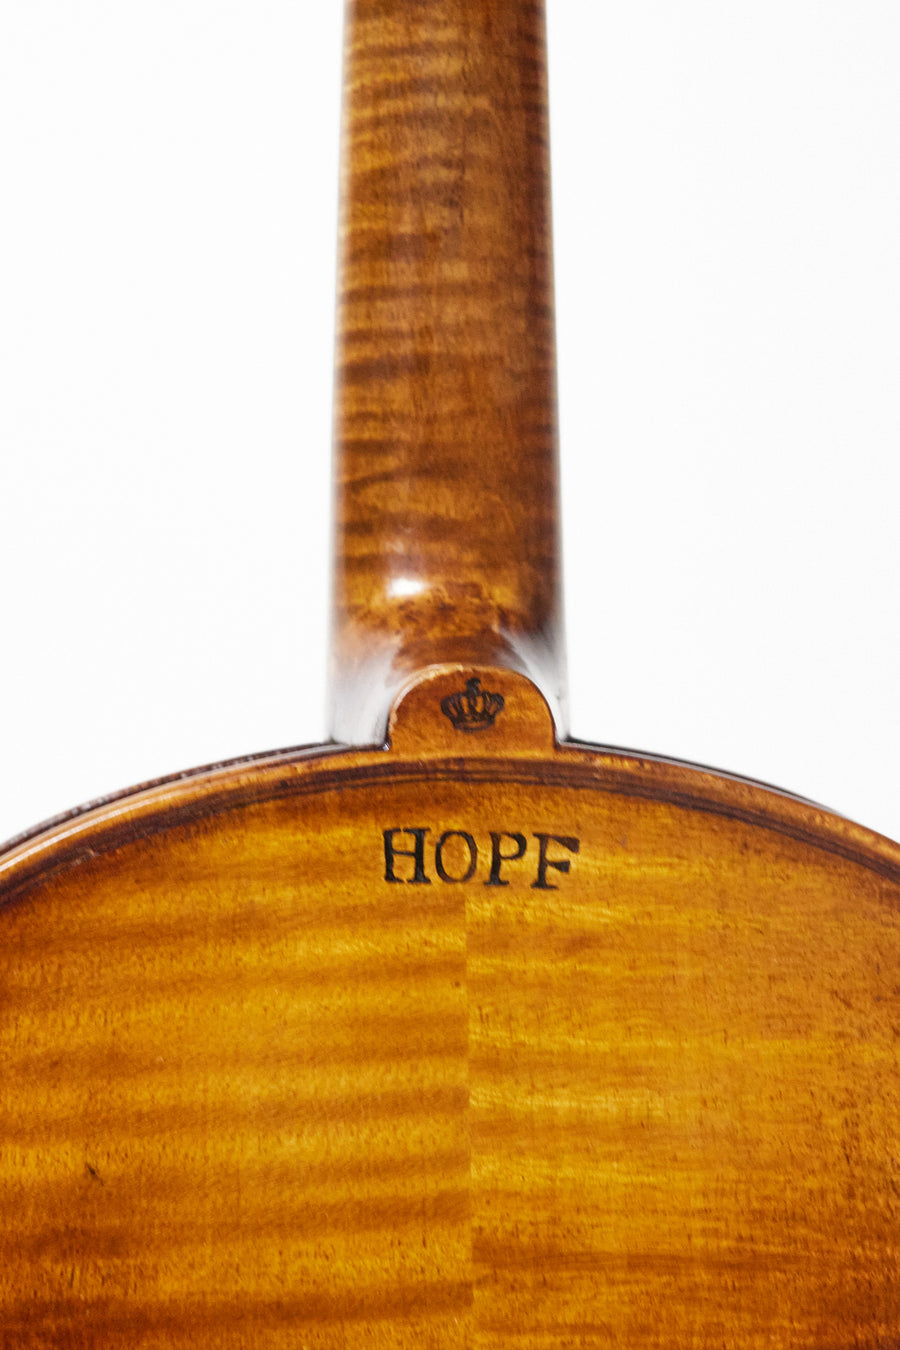 A Violin From Johann Traugott Glass, Third Quarter 19th C.